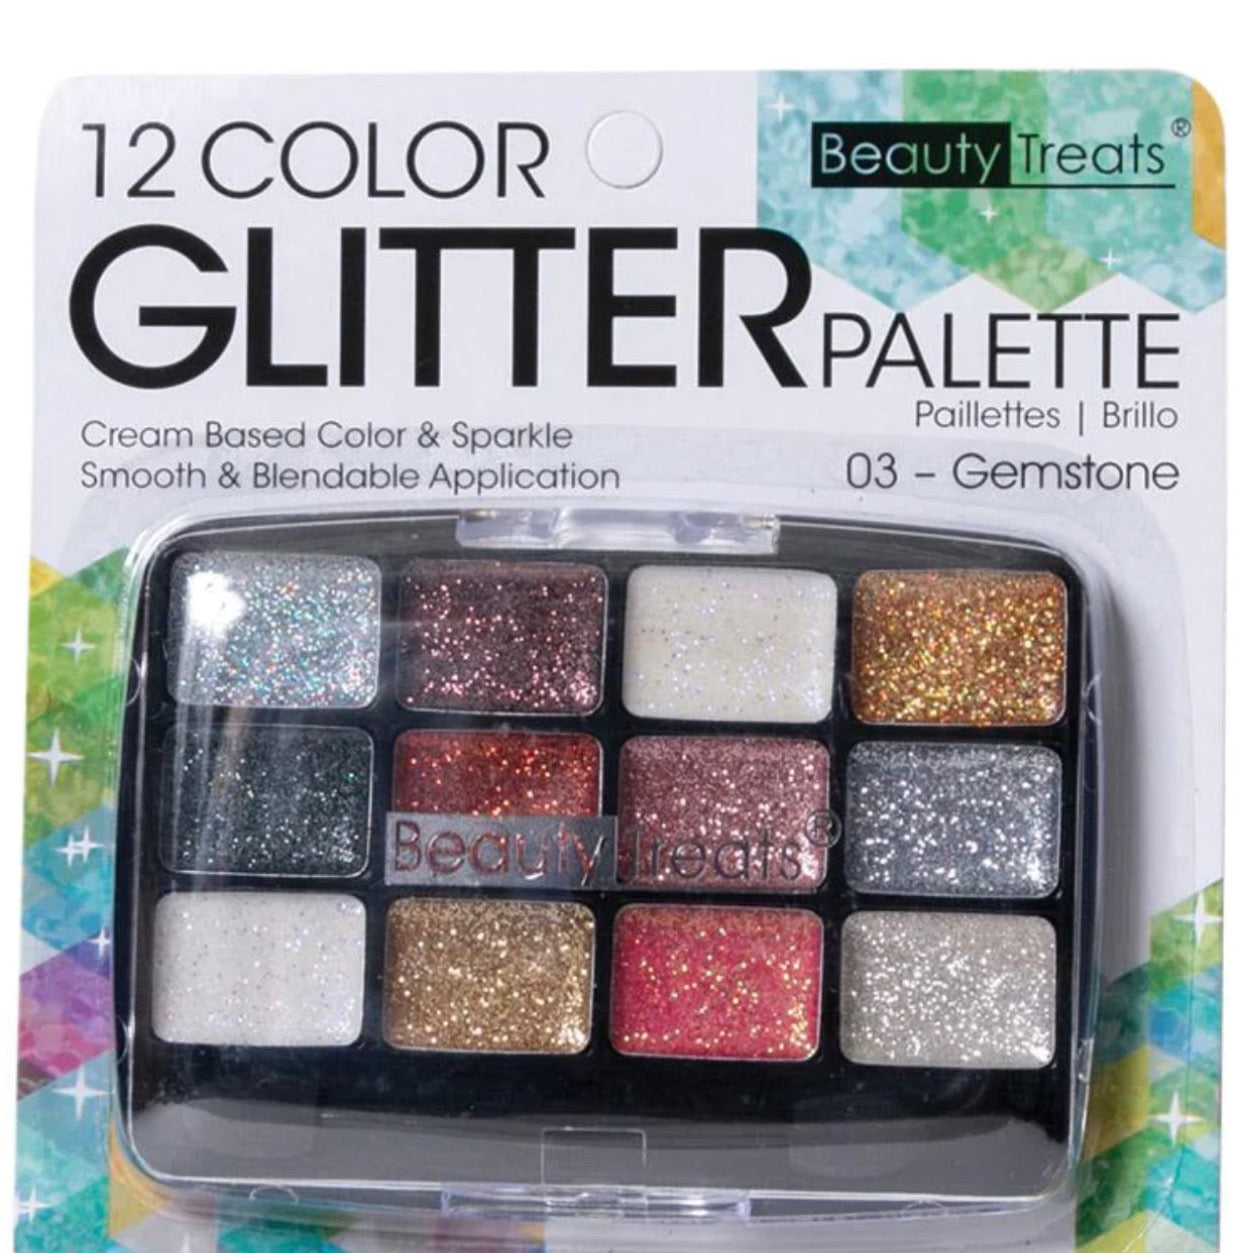 12 Color Glitter Palette